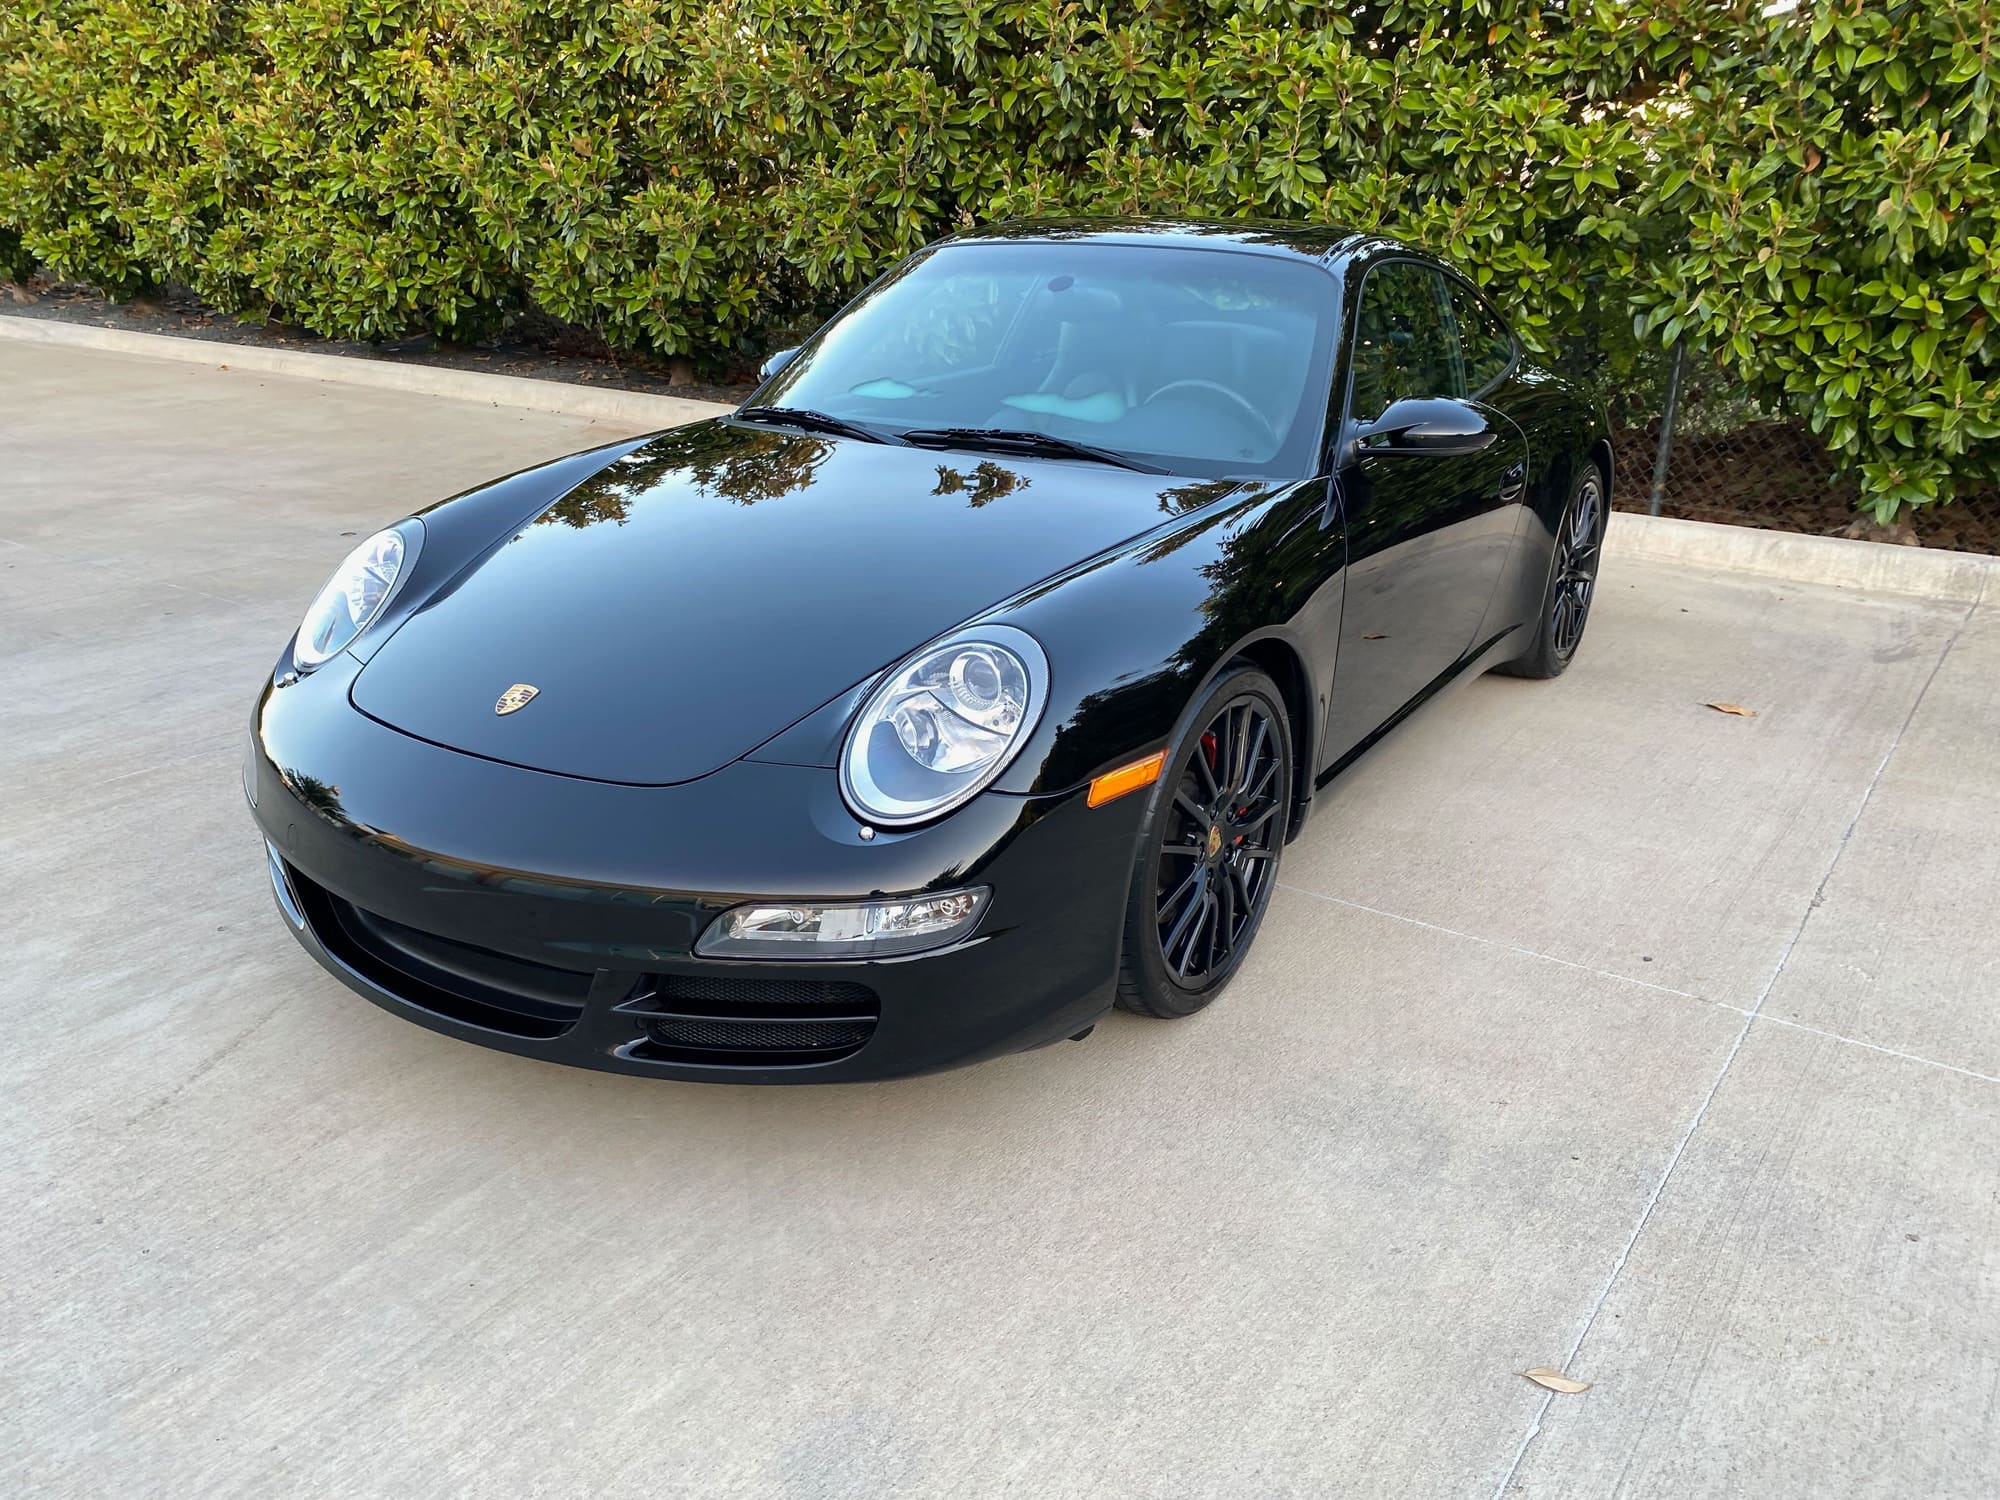 2001 Porsche 911 - 2007 Porsche 911 C2S Coupe (997S) 6 Speed.  Black/Black 53k miles - Used - VIN WP0AB29907S732266 - 53,900 Miles - 6 cyl - 2WD - Manual - Coupe - Black - Dallas, TX 75231, United States